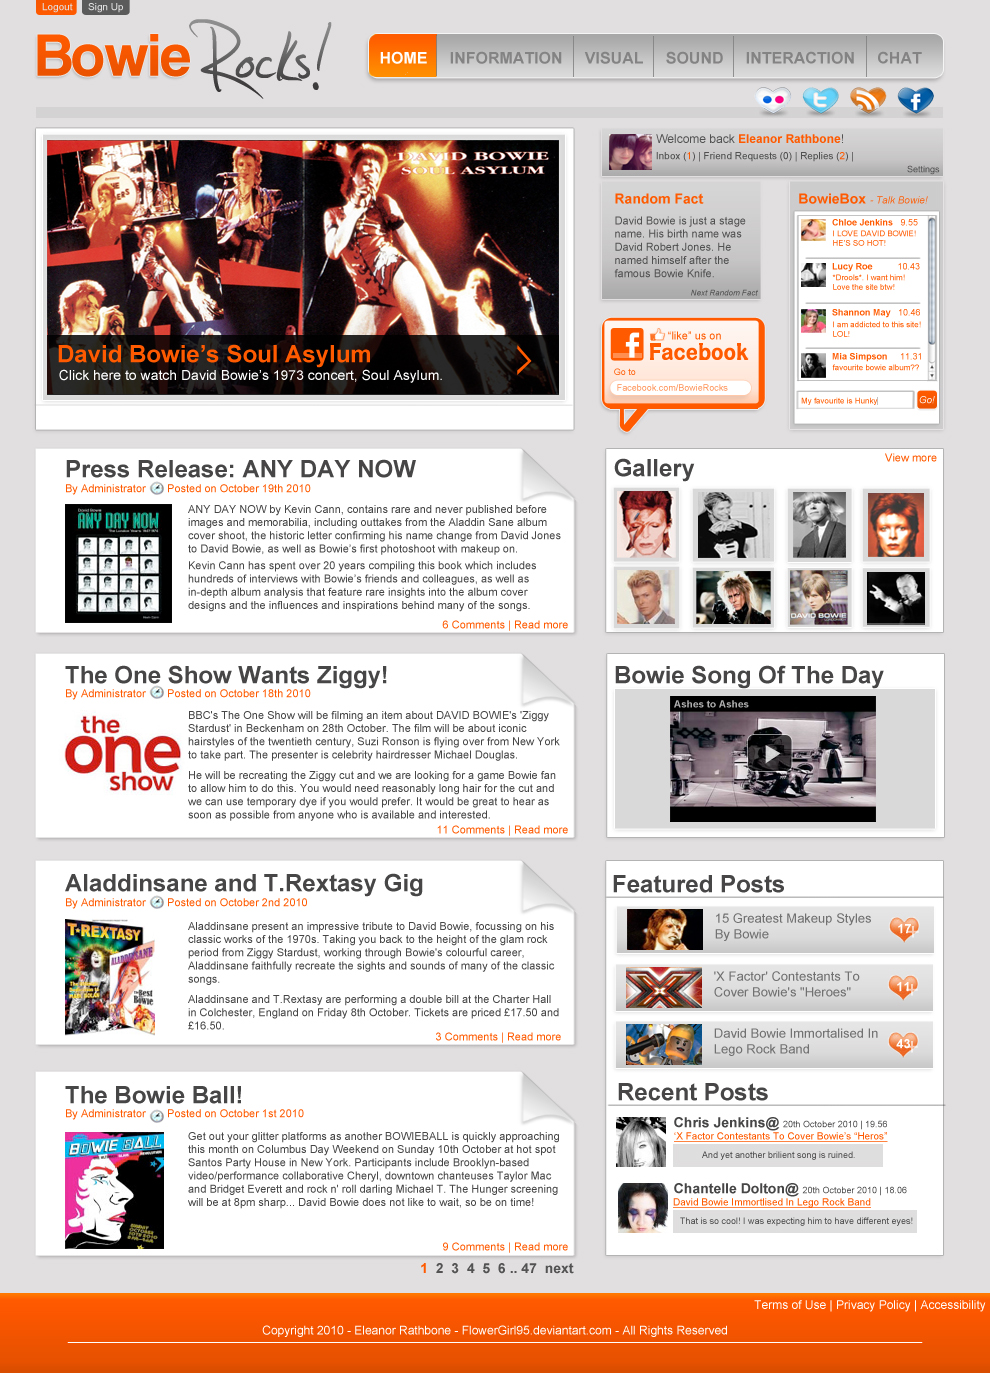 David Bowie Fan Site Design